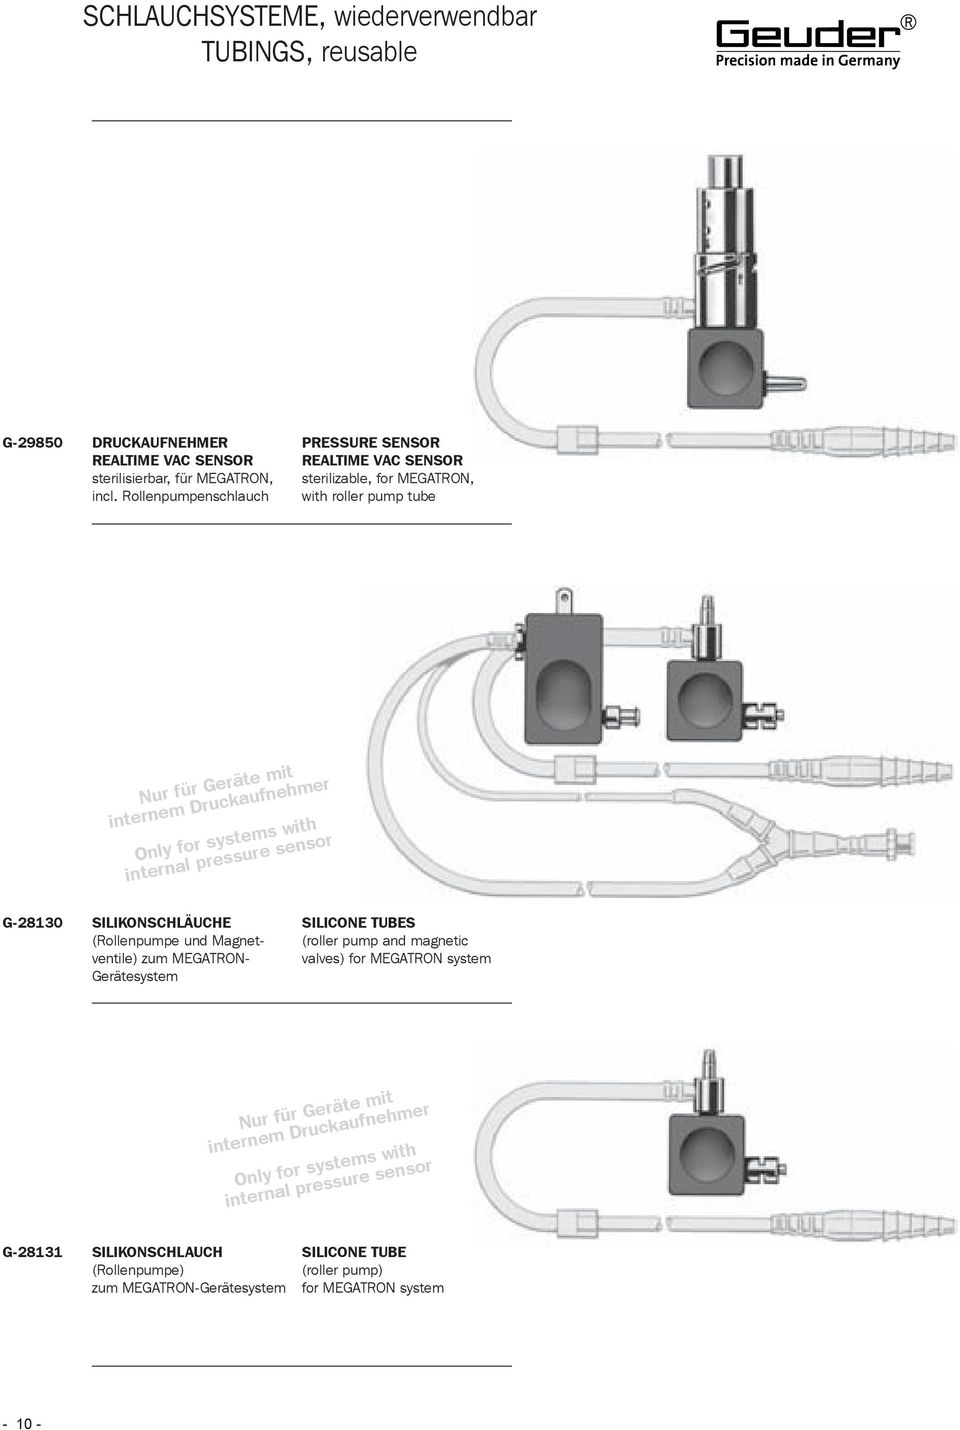 internal pressure sensor G-28130 SILIKONSCHLäUCHE (Rollenpumpe und Magnetventile) zum MEGATROn- Gerätesystem SILICONE TUBES (roller pump and magnetic valves) for MEGATROn